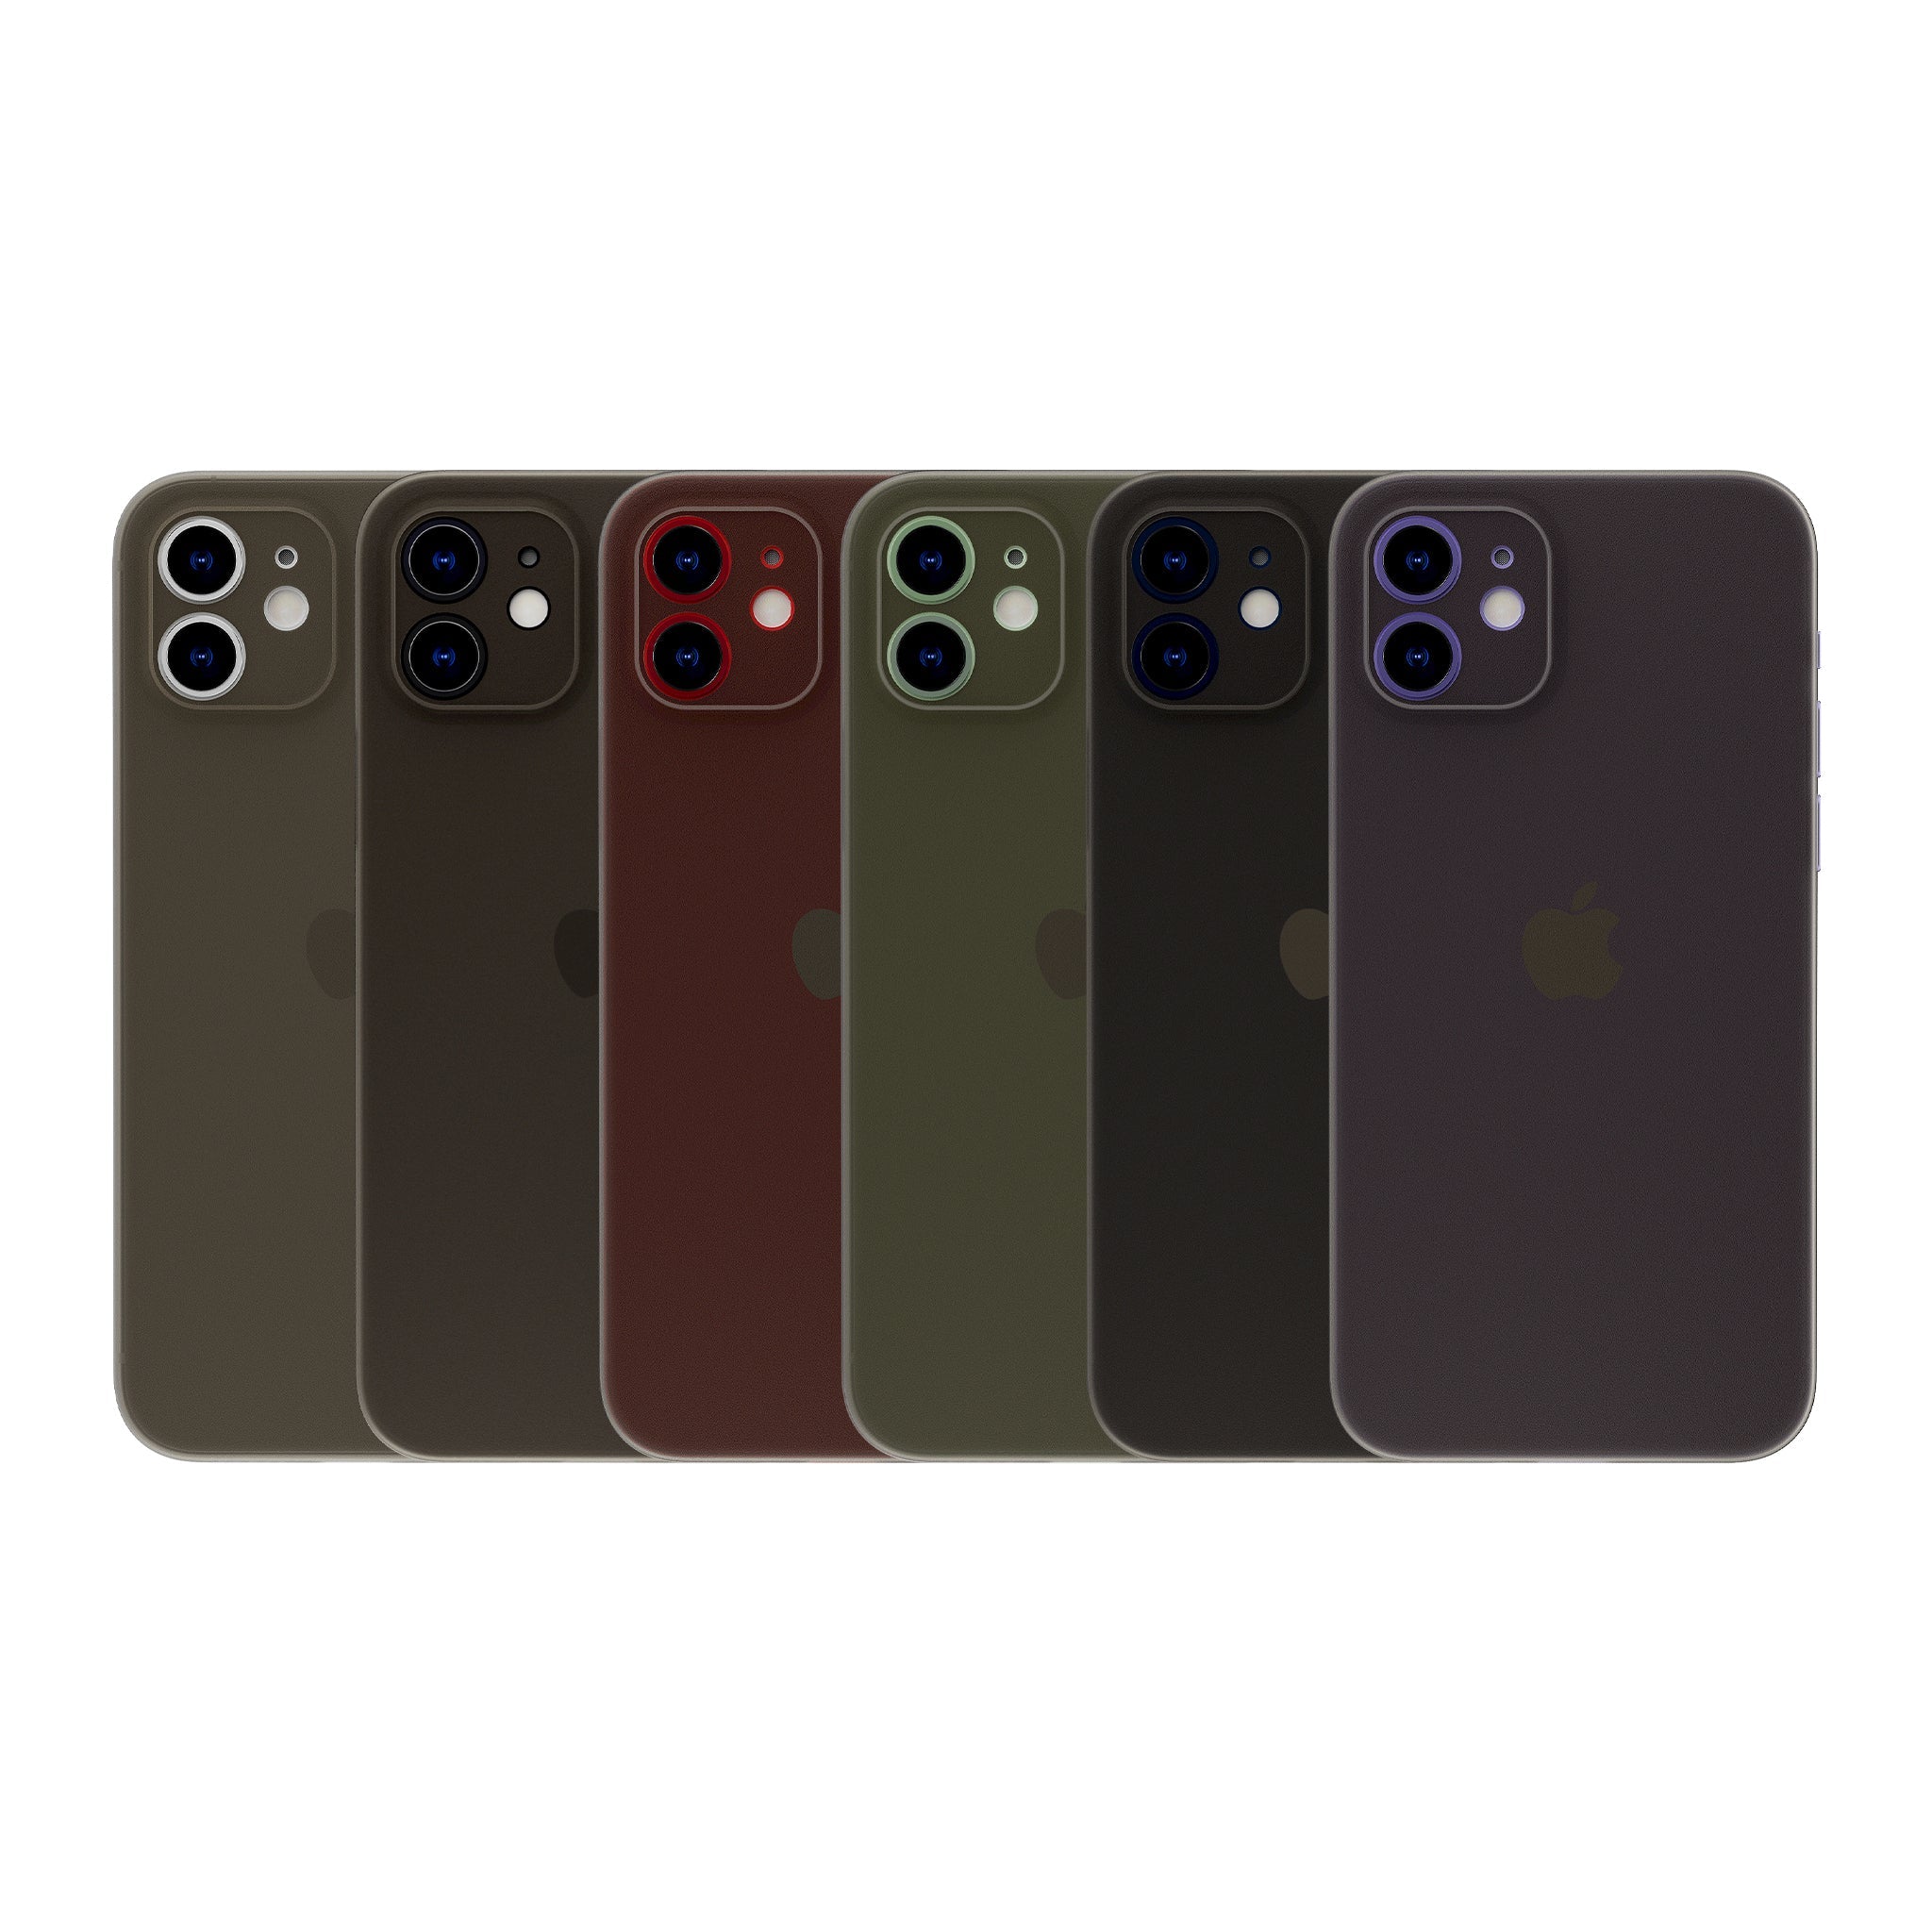 iphone 12 cases, iphone 12 case, slimcase iphone 12, iphone 12 slimcase